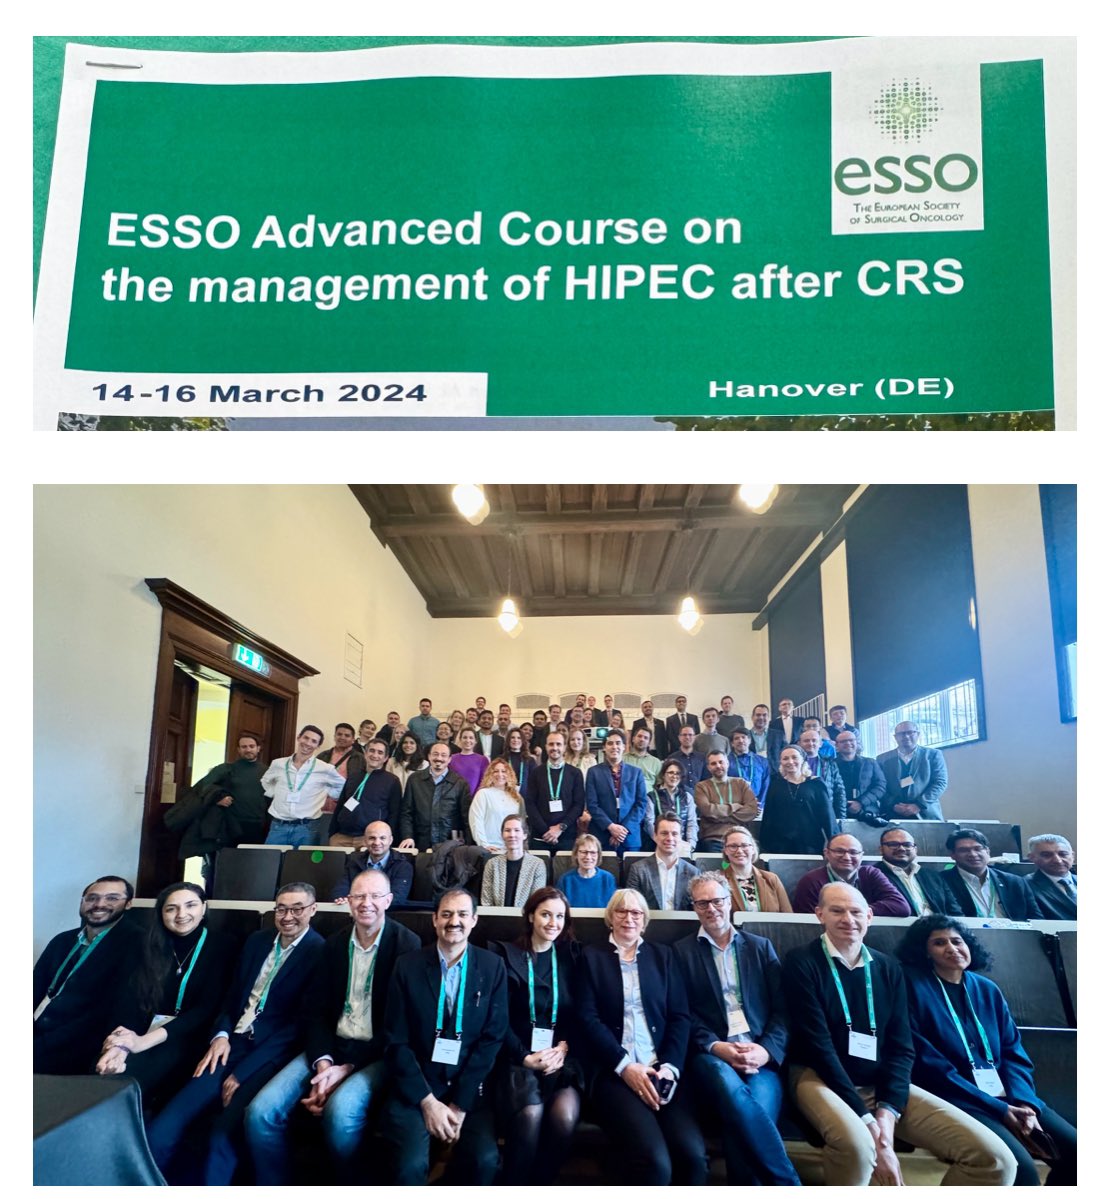 ESSO Hannover HIPEC Course Official Course photo @ISSPP1 @PSOGI_EC @IspsmHipec